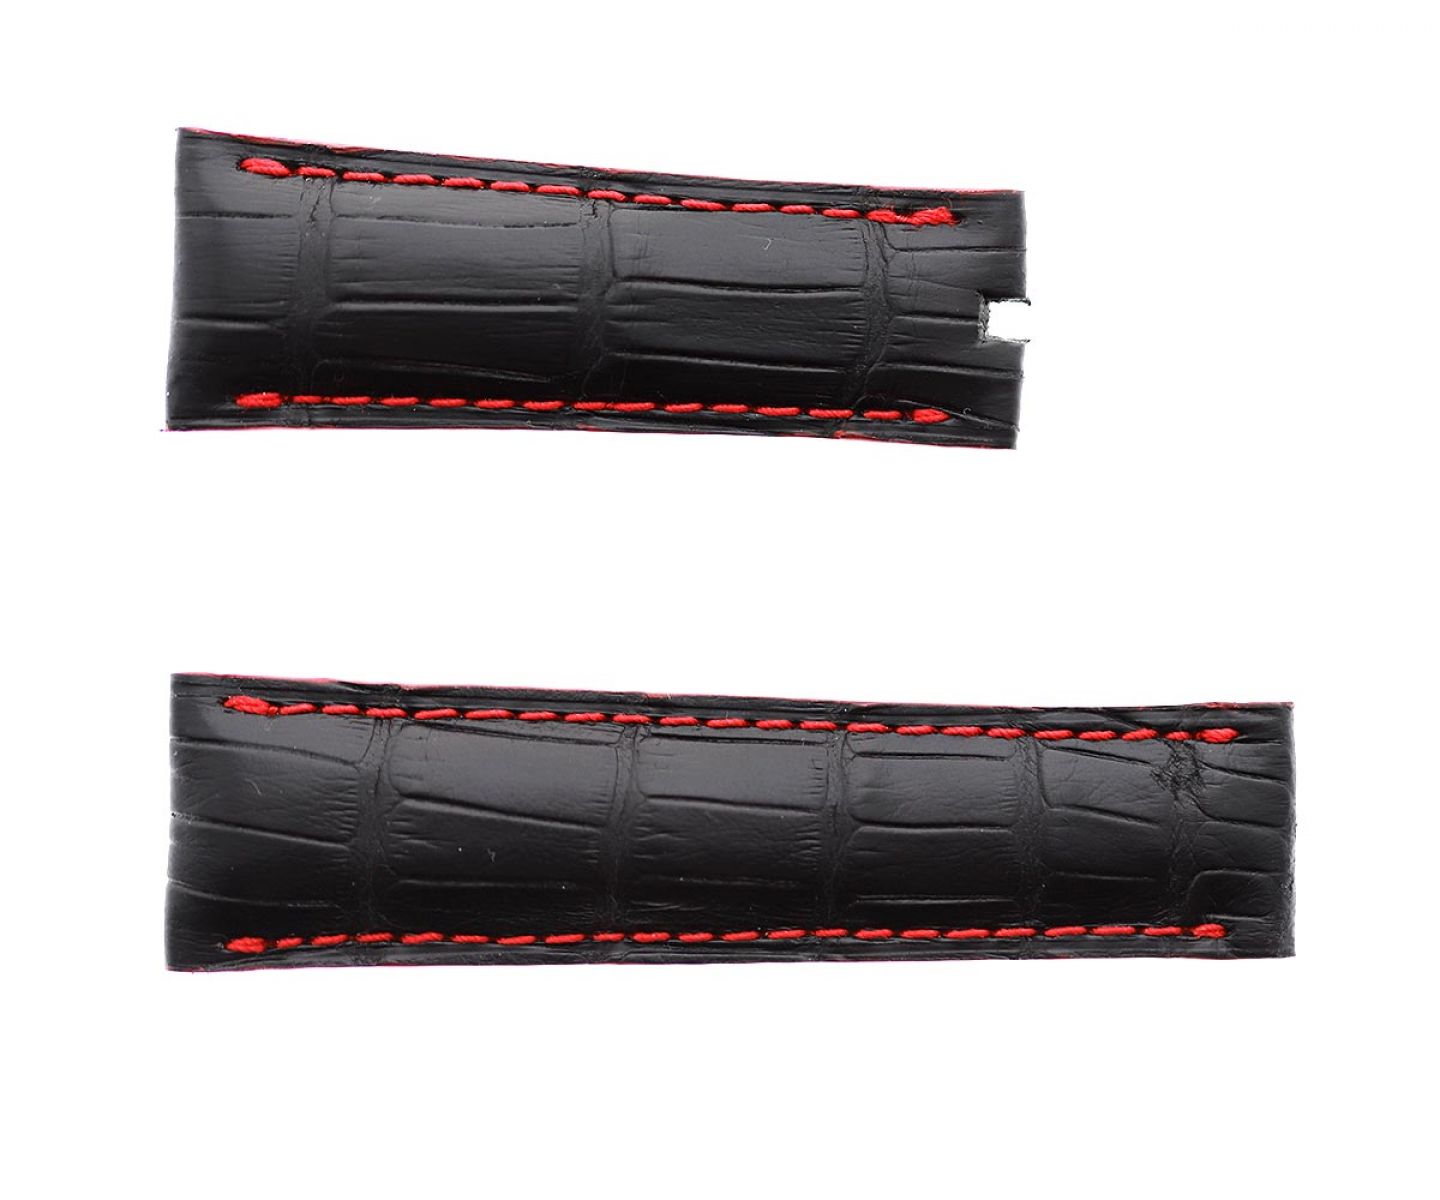 Black Alligator Leather strap 21mm Rolex Sky-Dweller style. Red stitching